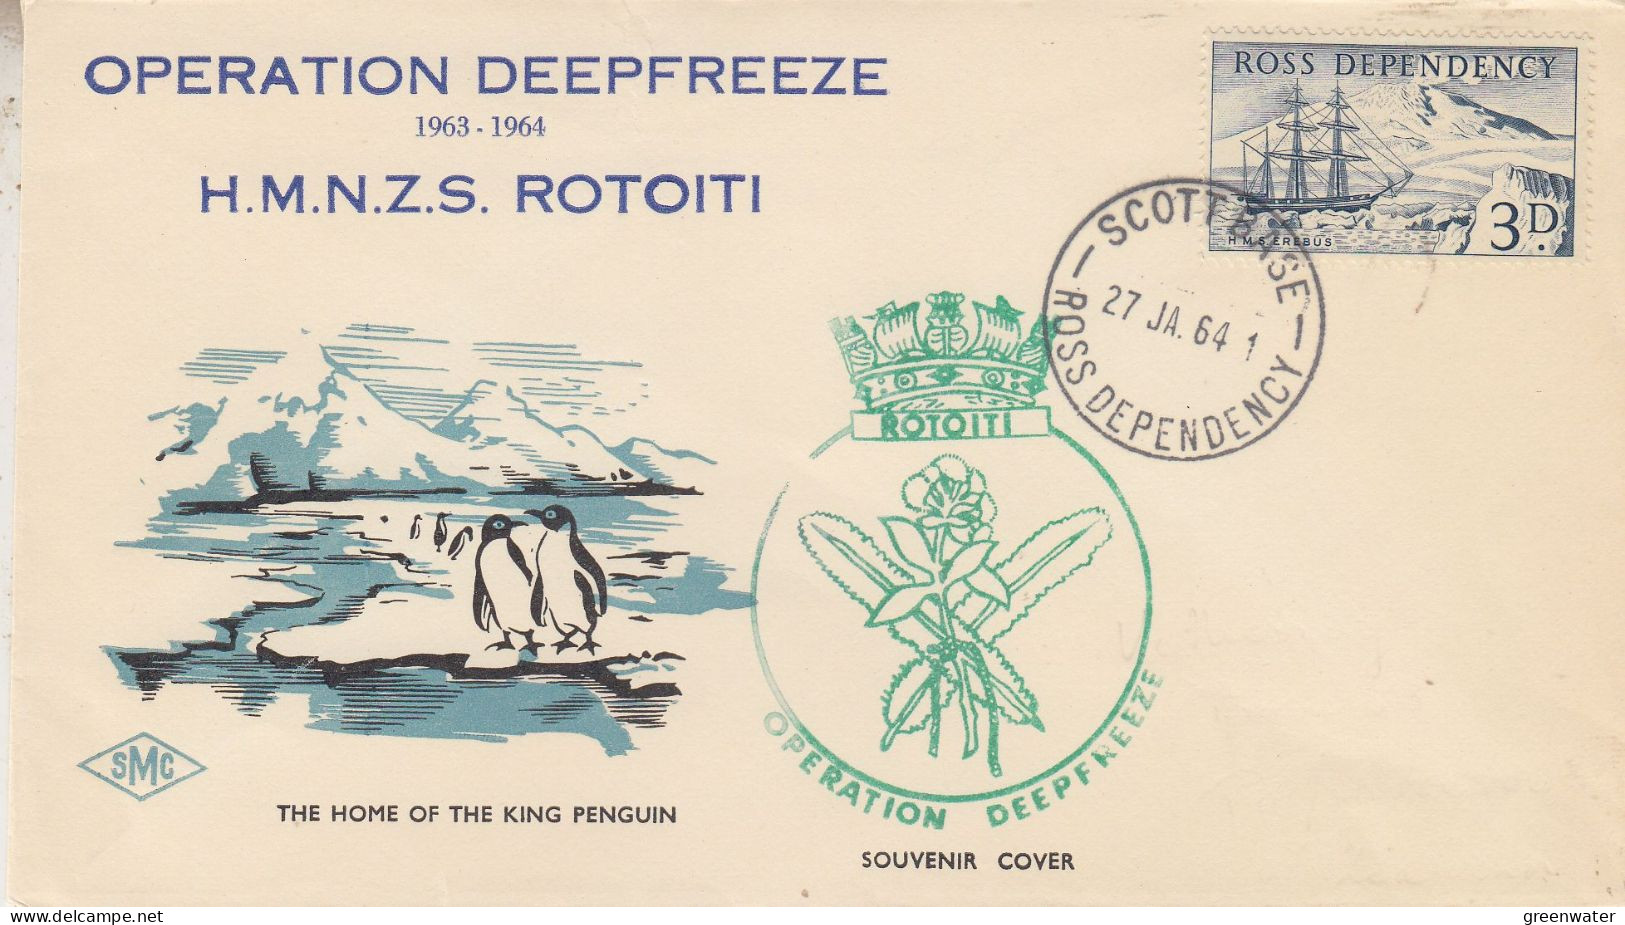 Ross Dependency HMNZS Rotoiti  Ca Scott Base 27 JA 1964 (SR210) - Polar Ships & Icebreakers